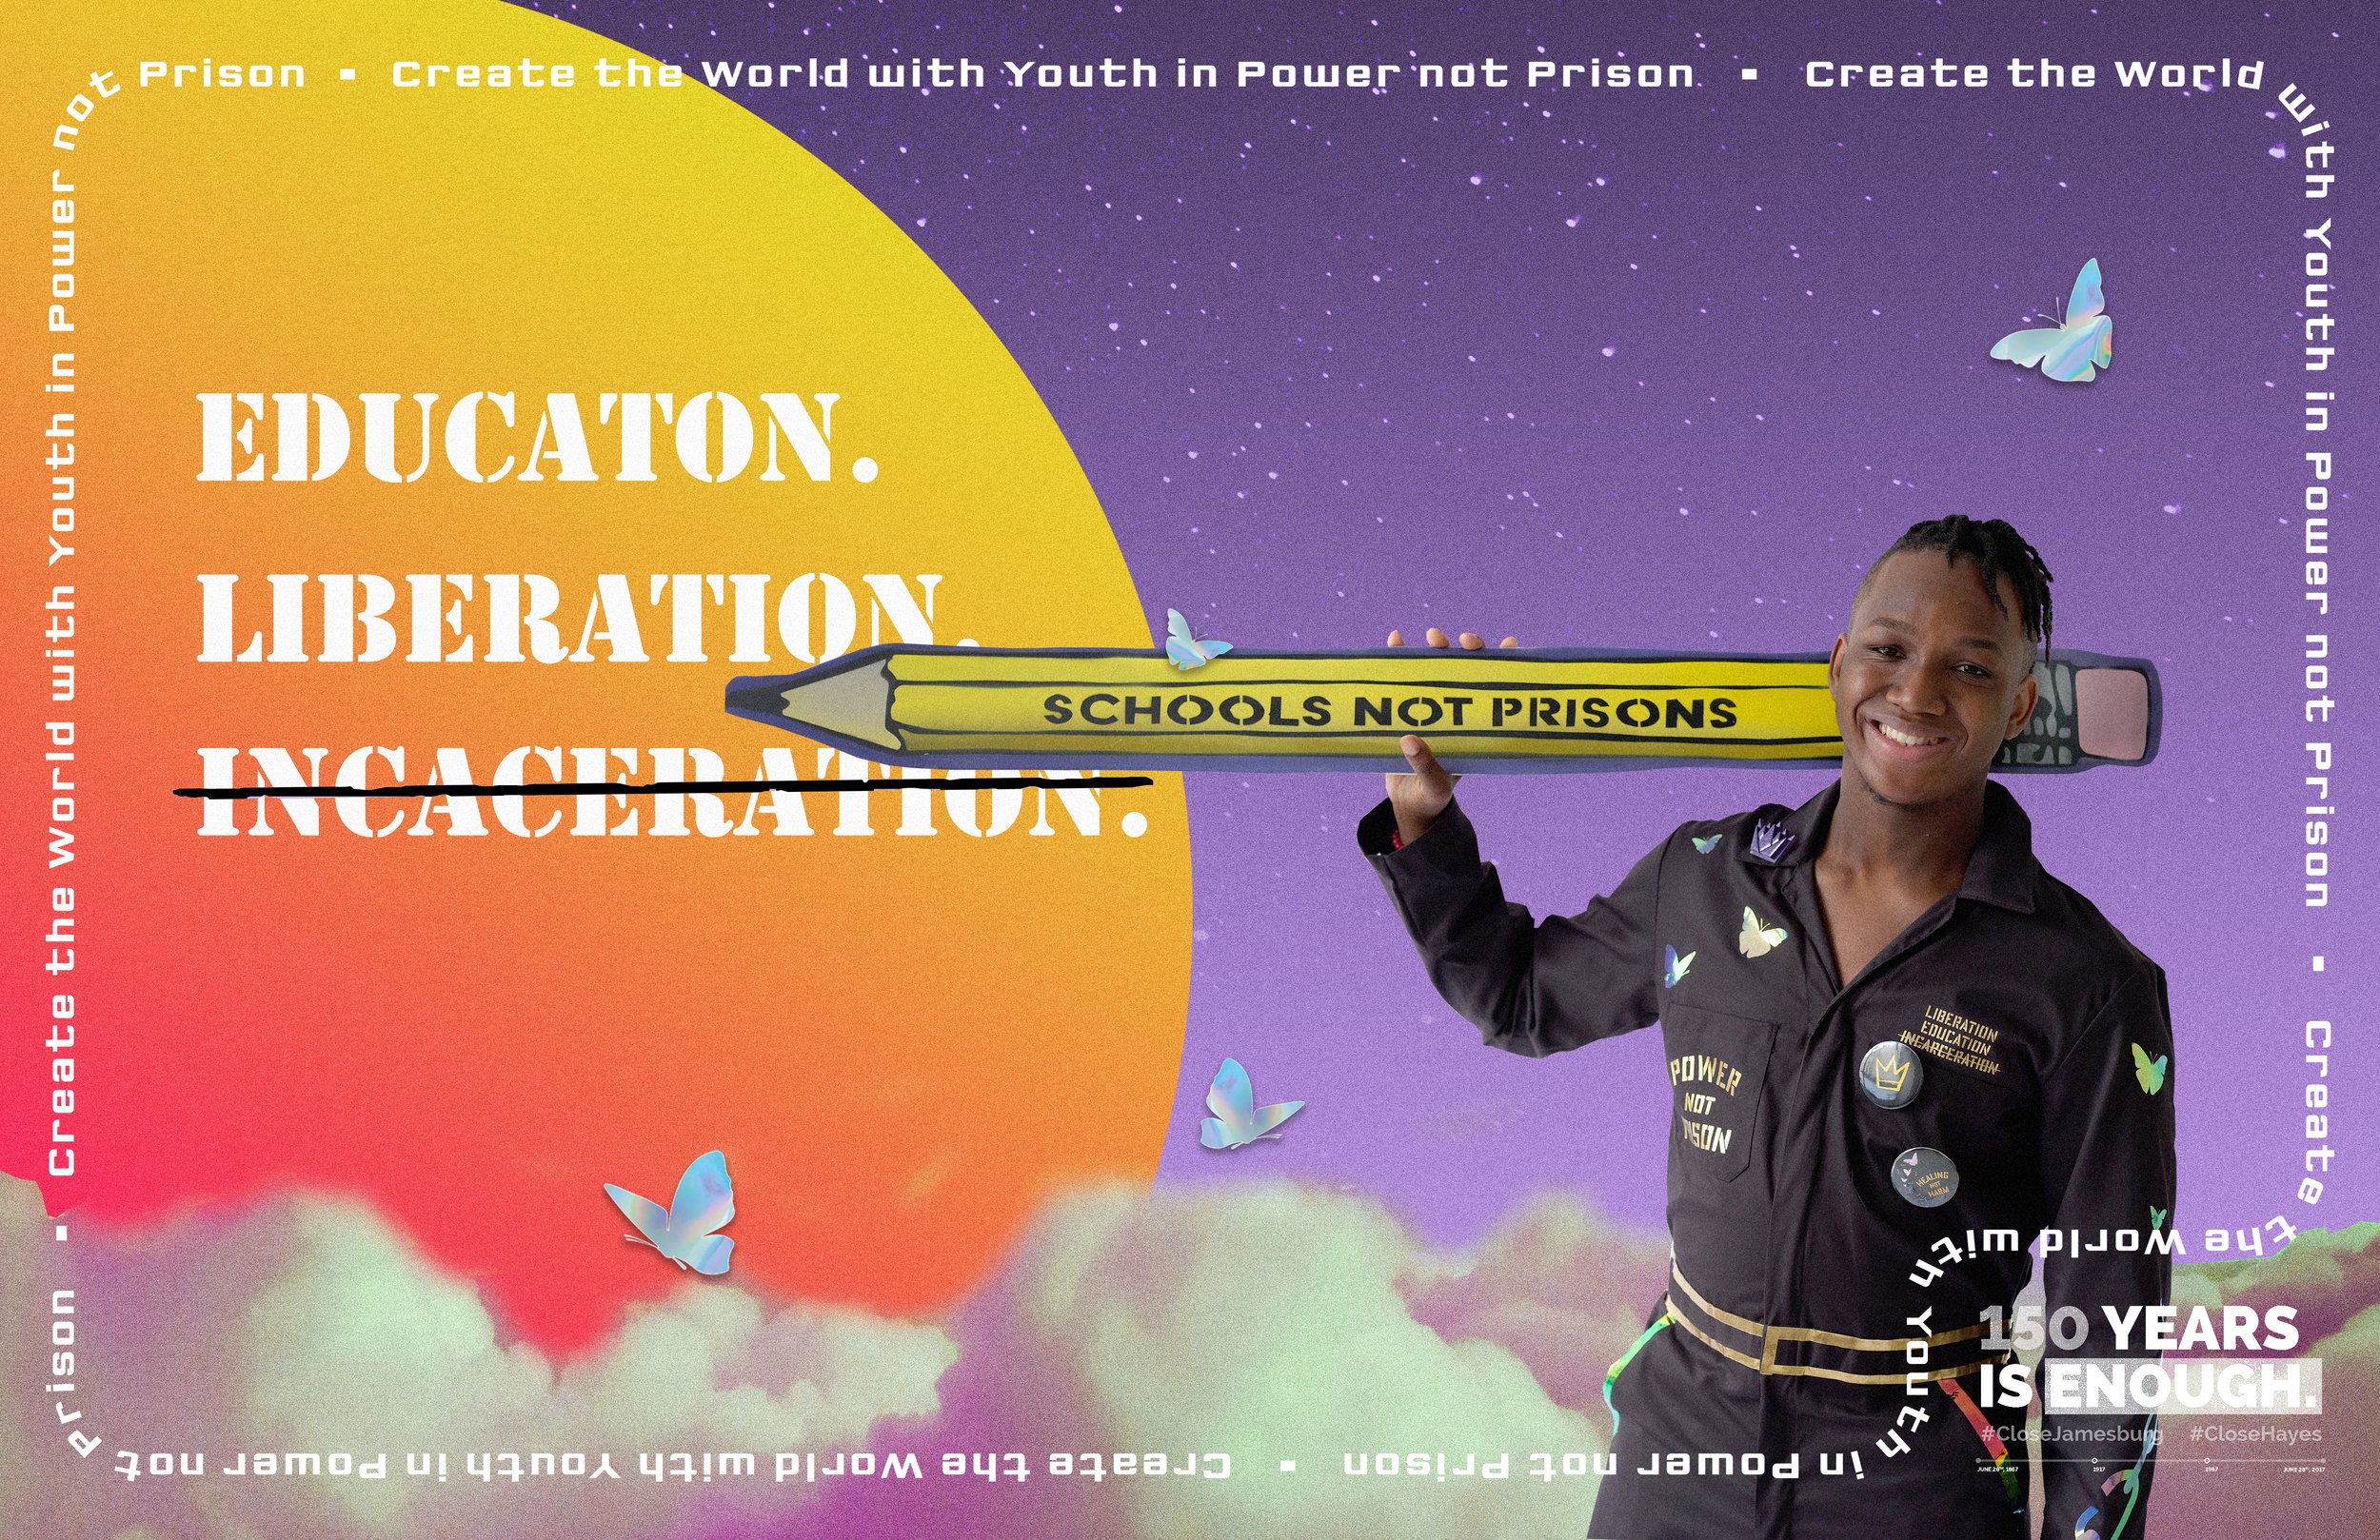 Education_Liberation_Incarceration.jpg